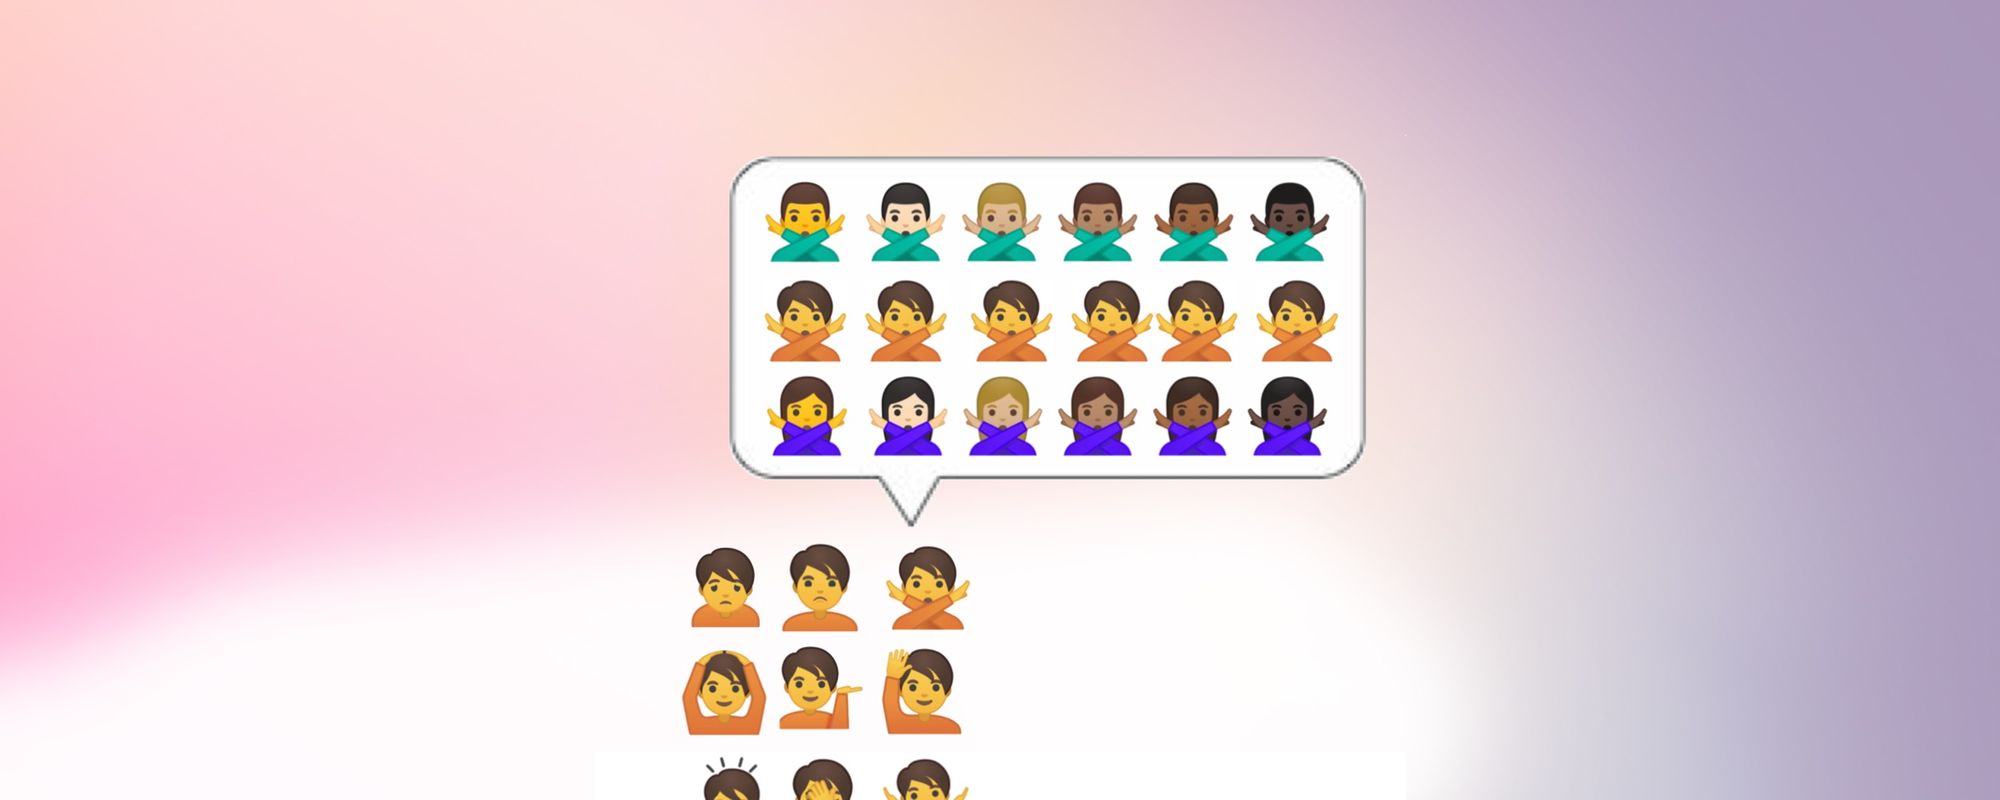 Google's Three Gender Emoji Future